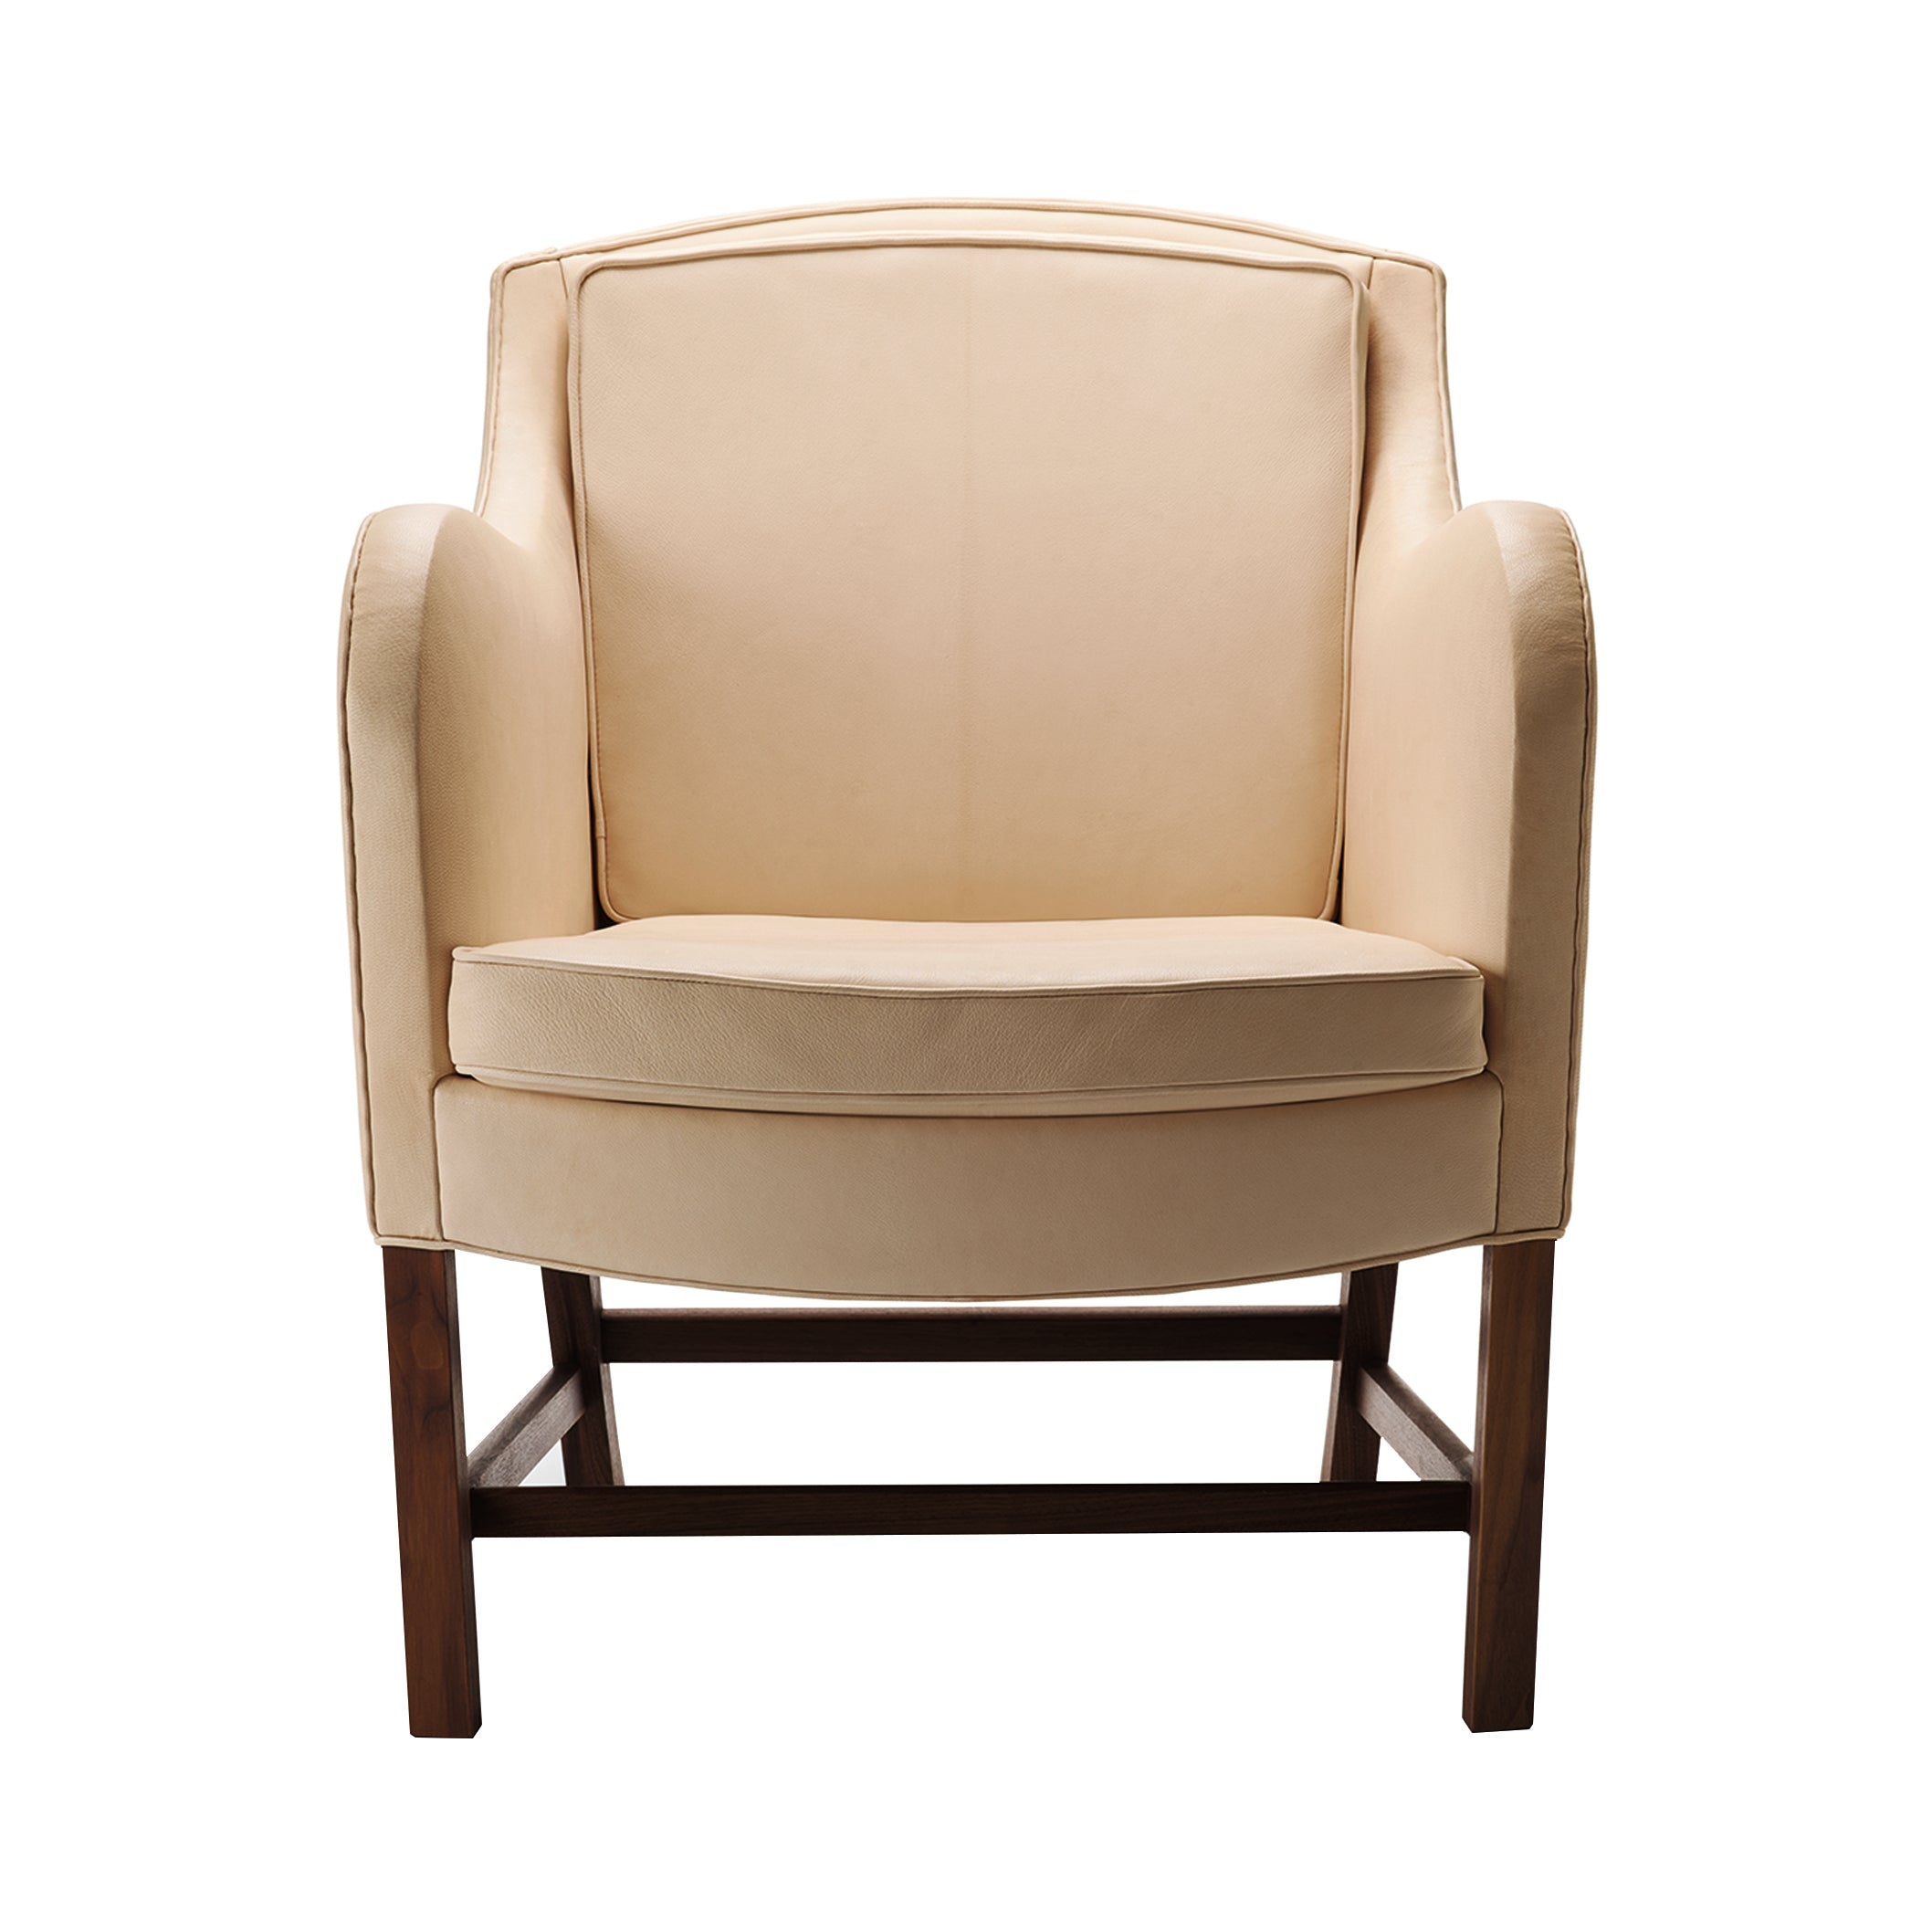 KK43960 Mix Chair: Oiled Walnut